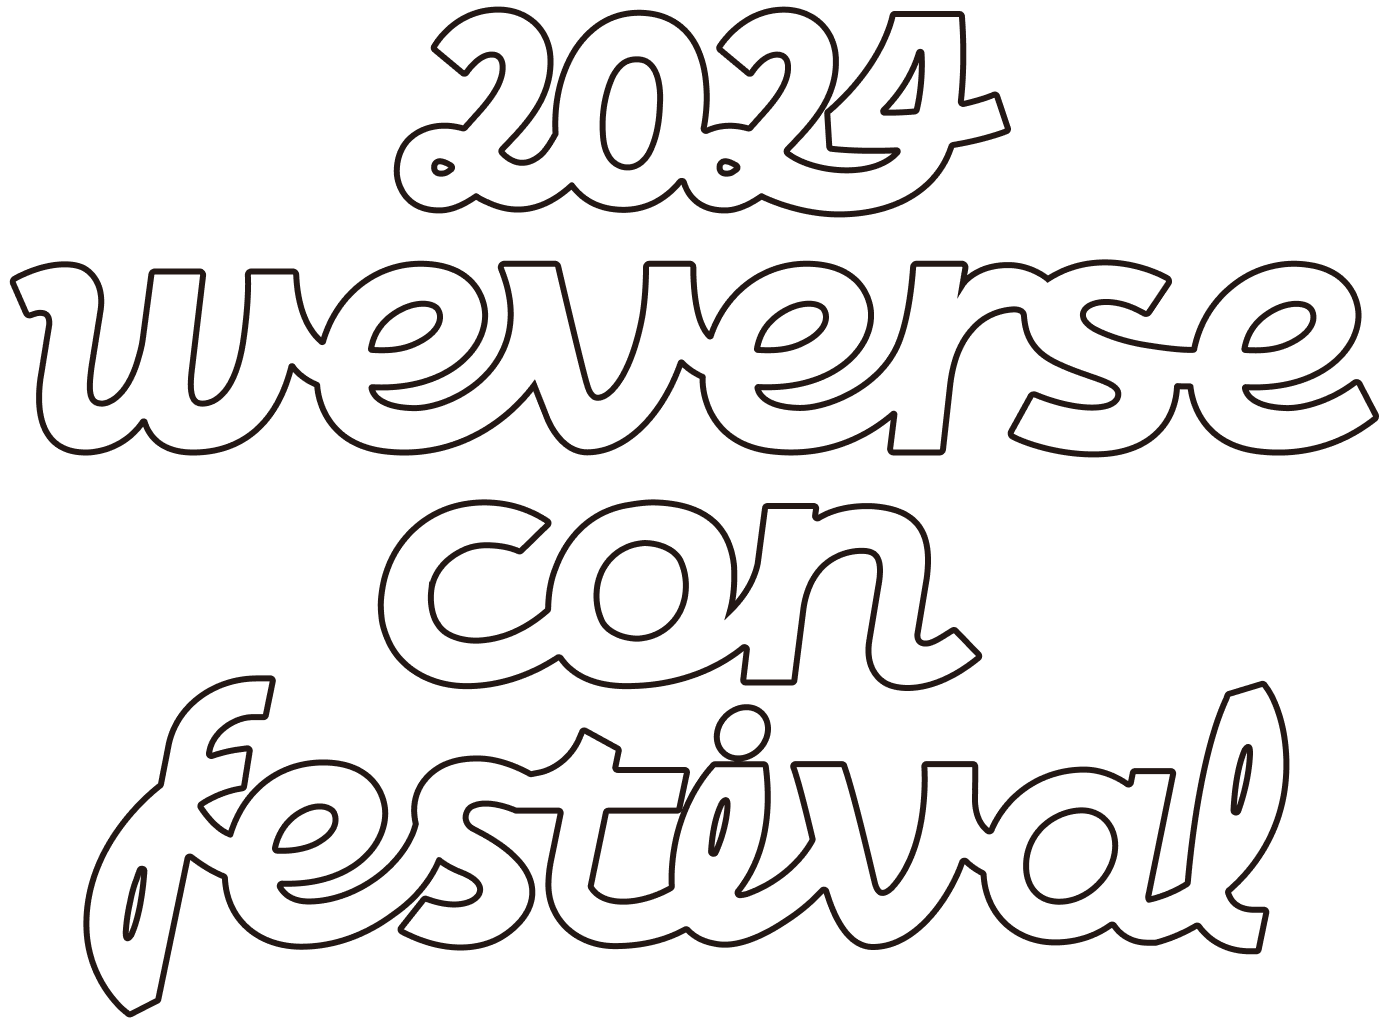 AliExpress 2024 weverse con festival